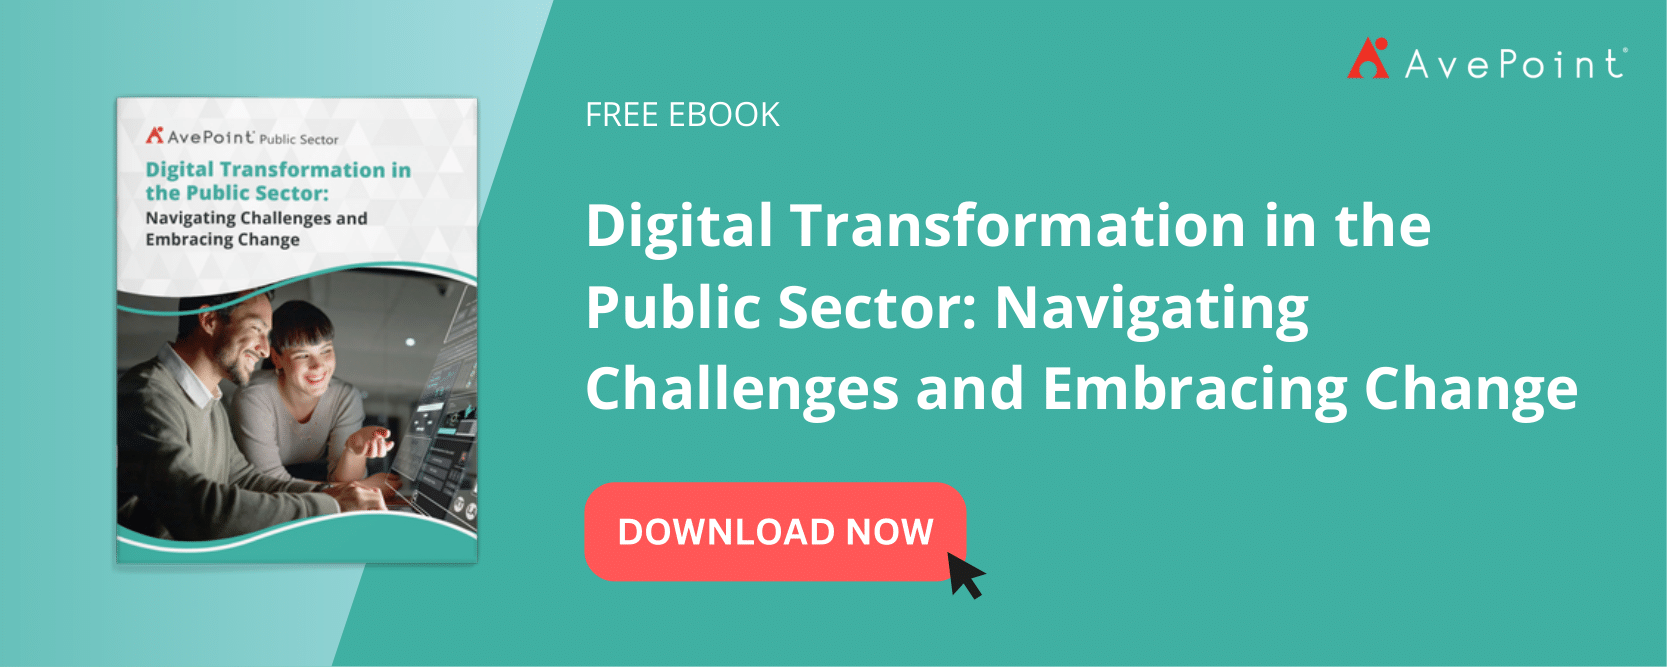 digital-transformation-public-sector-ebook